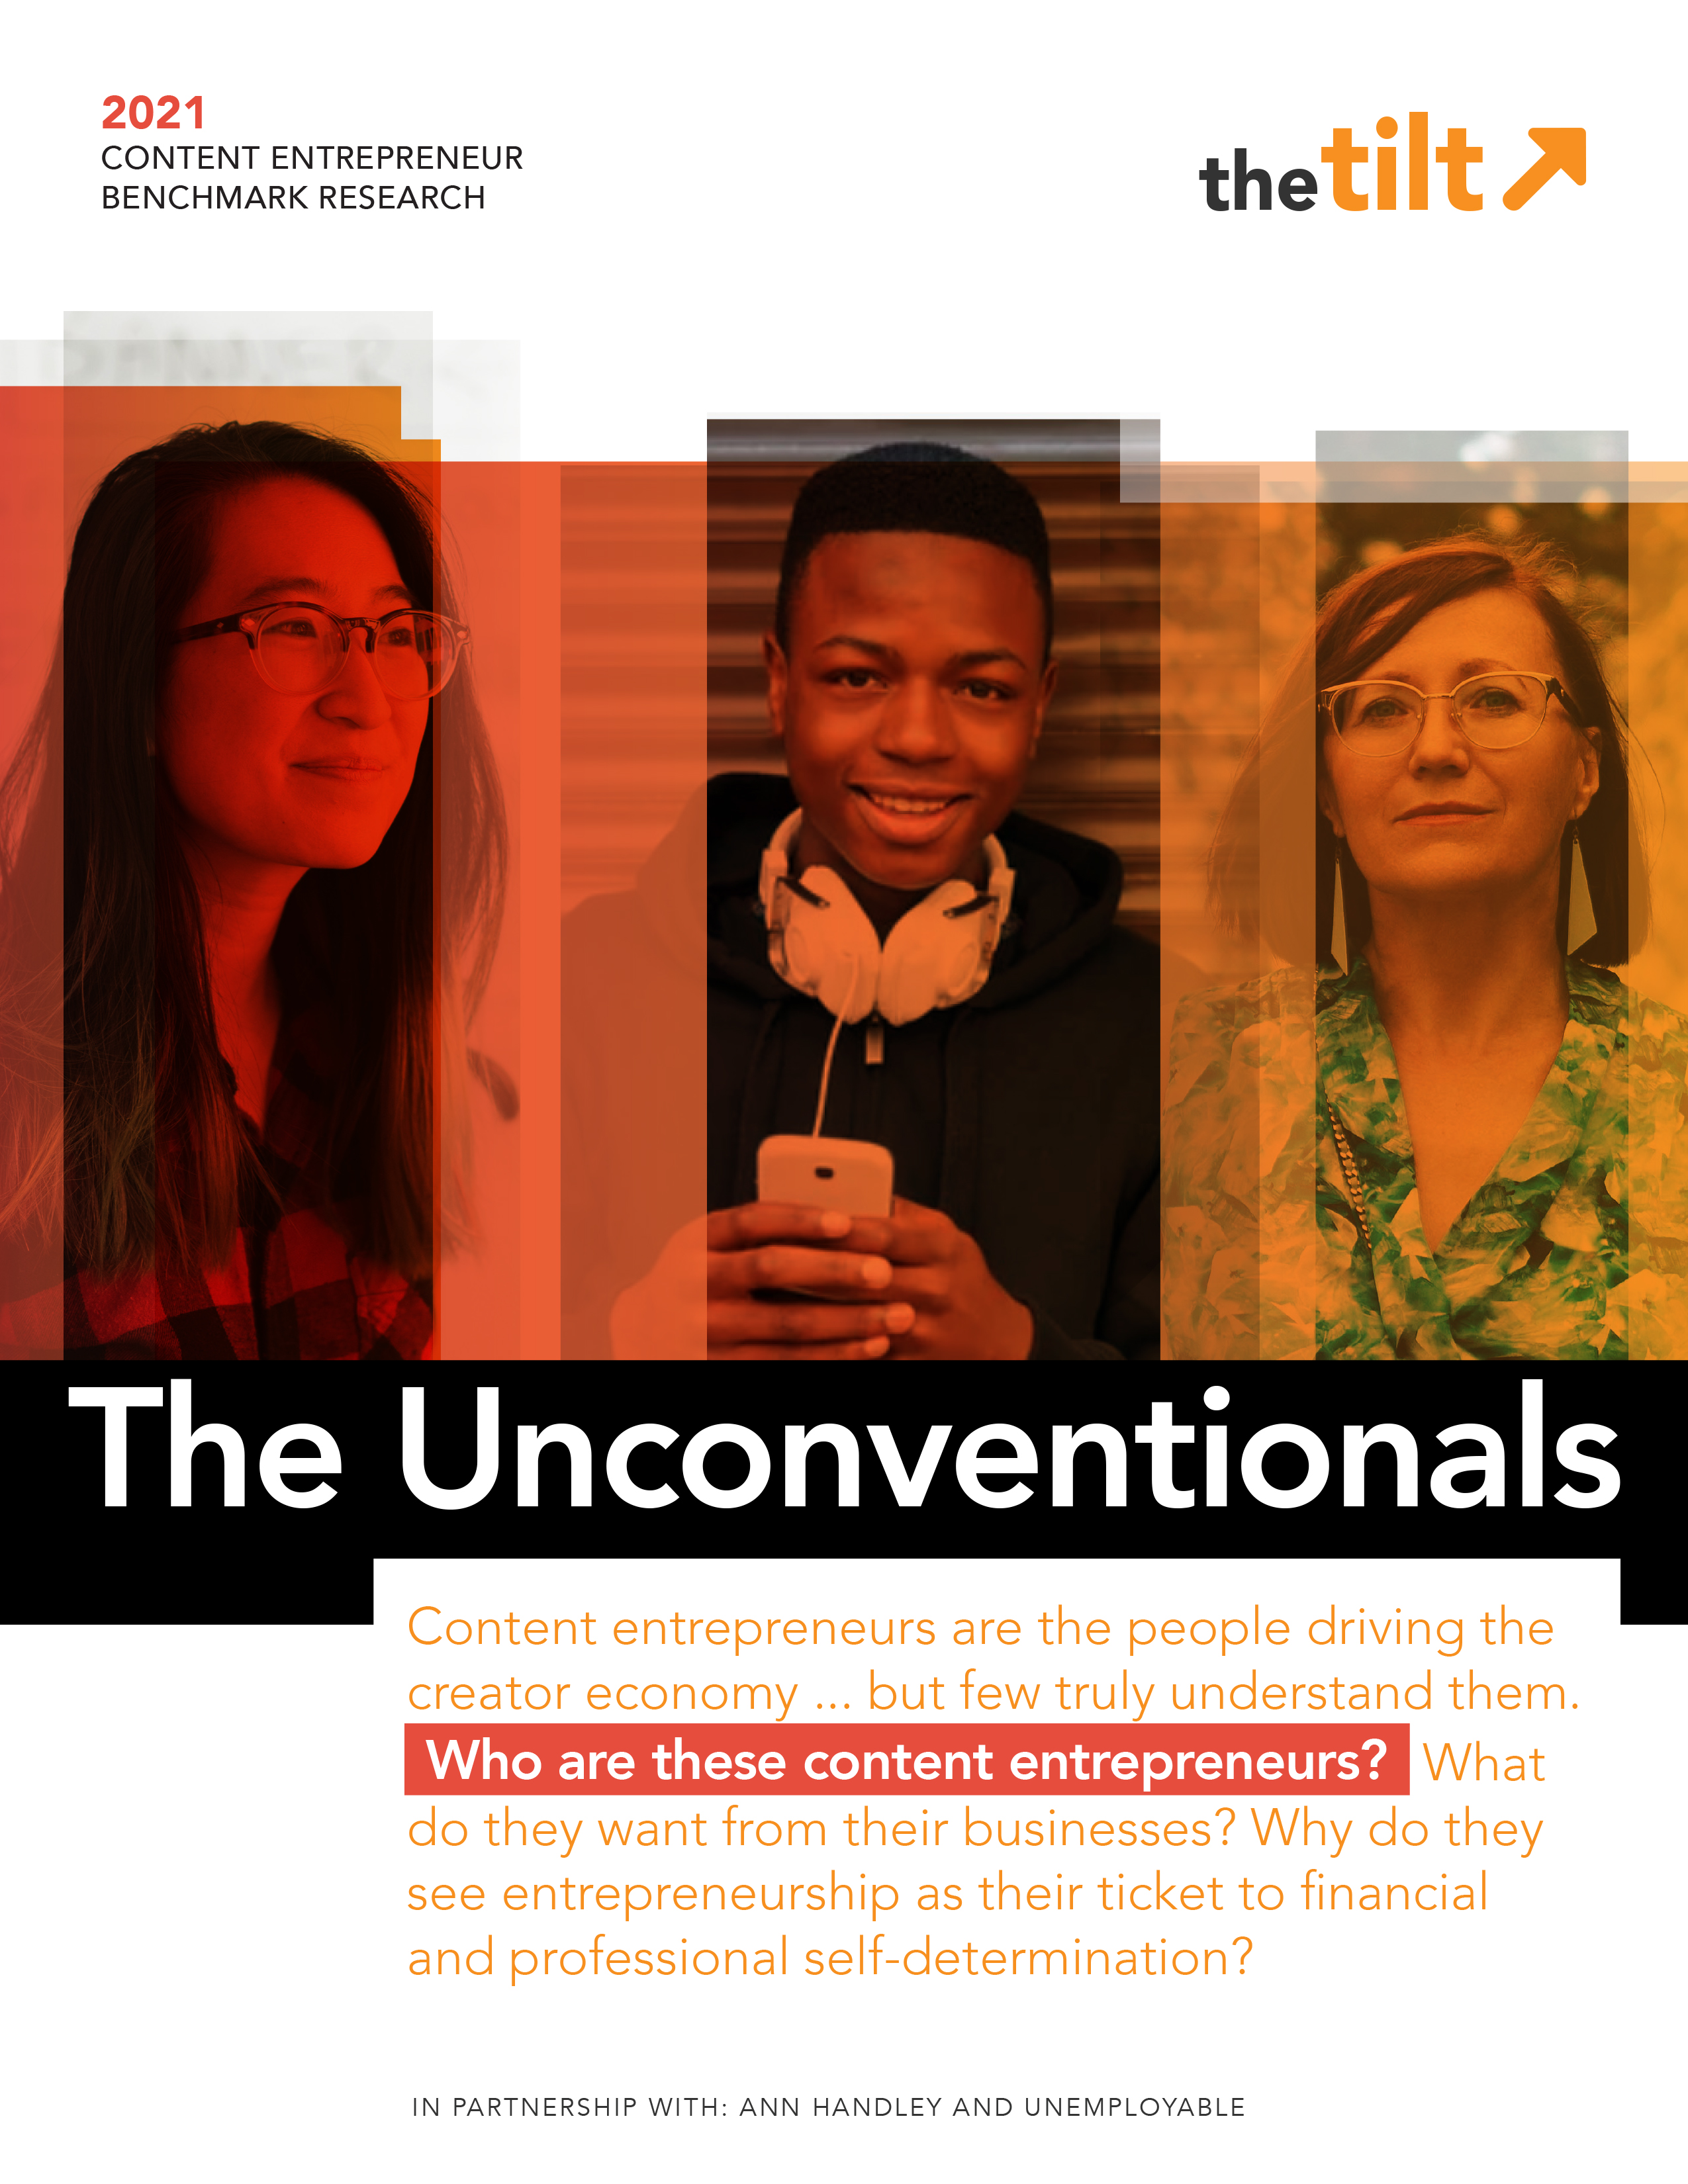 The Unconventials - Content Entrepreneur Benchmark Report